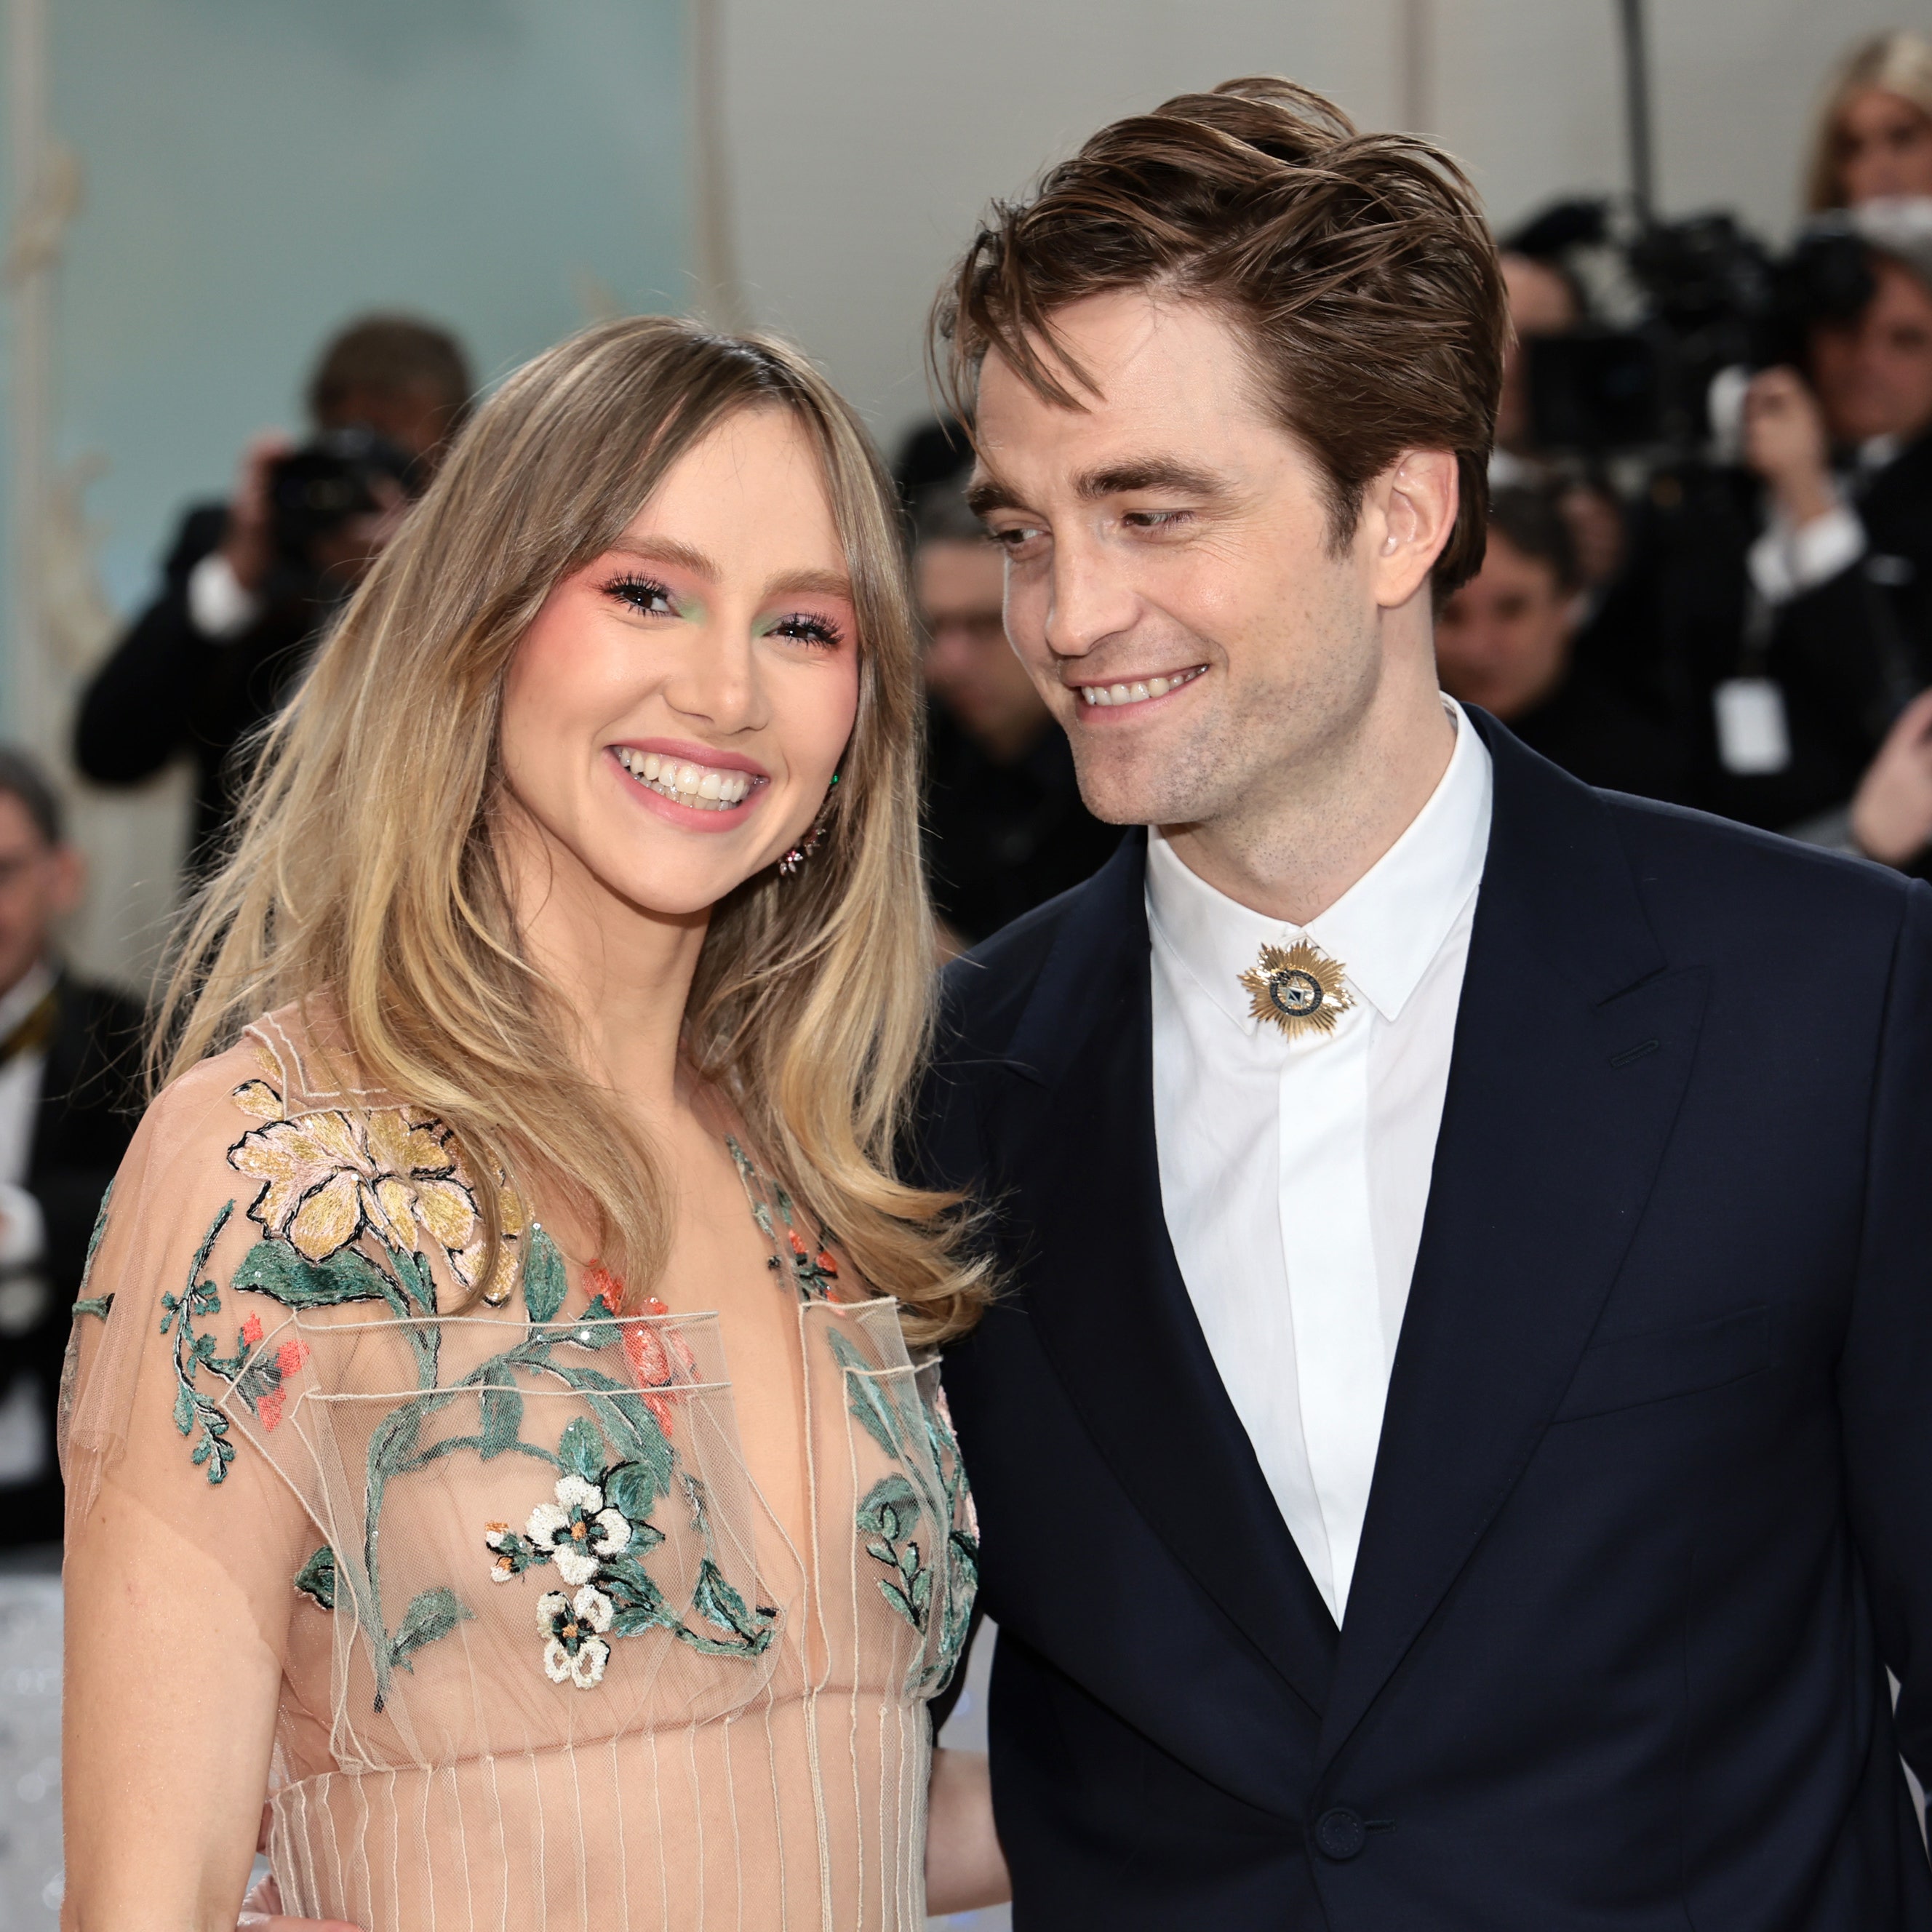 Robert Pattinson and Suki Waterhouse's Meet Cute Sounds Like a Rom-Com